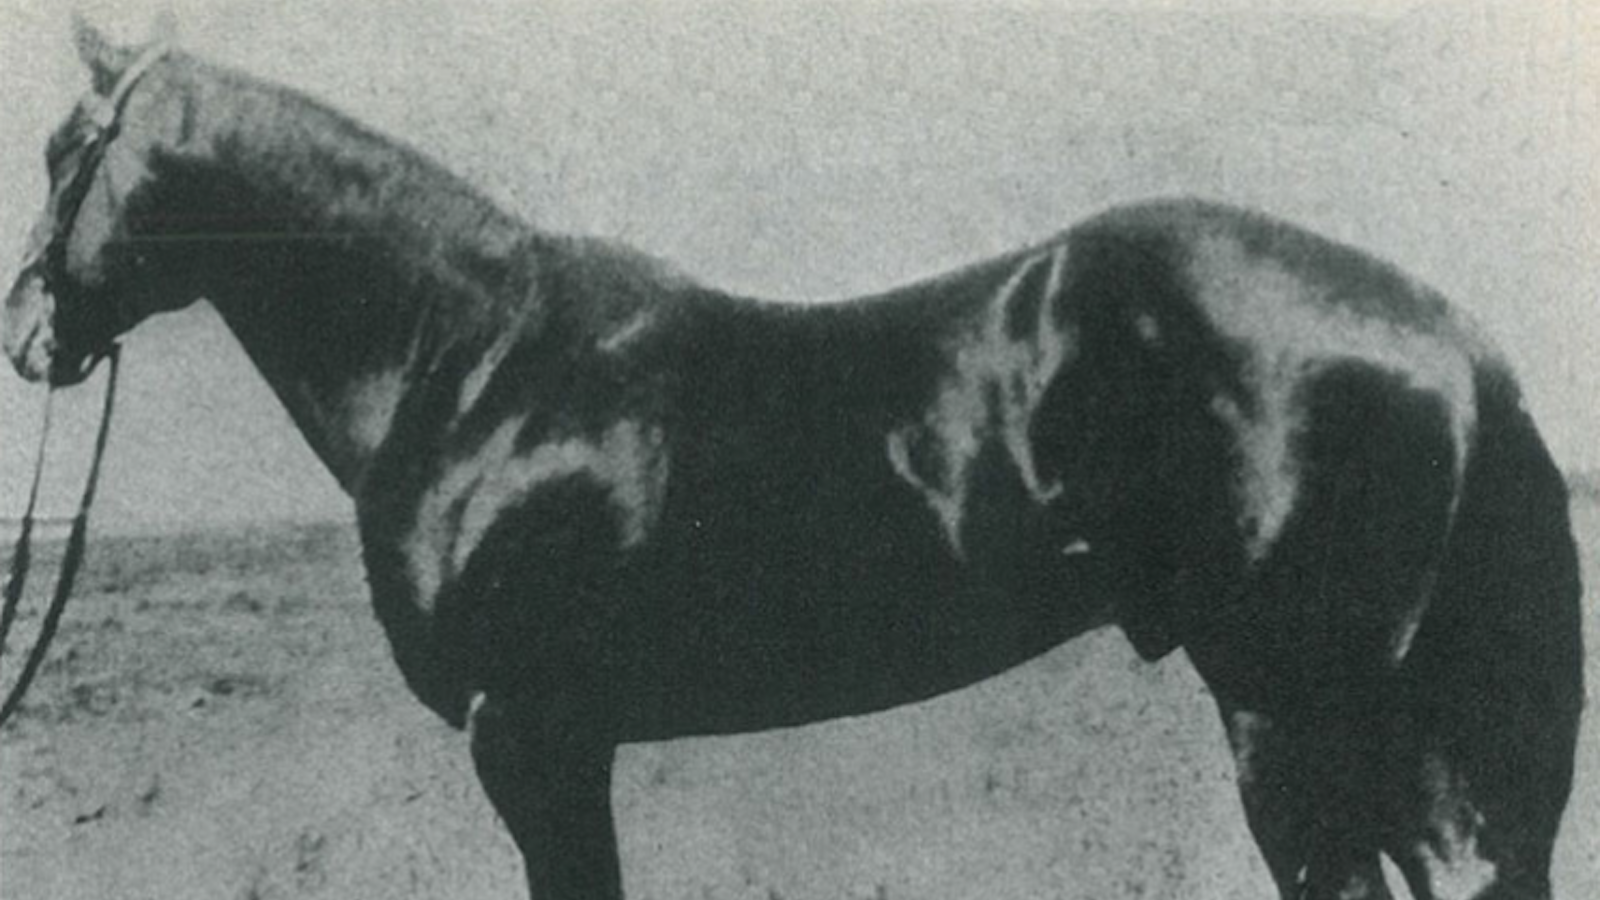 black quarter horse stallion